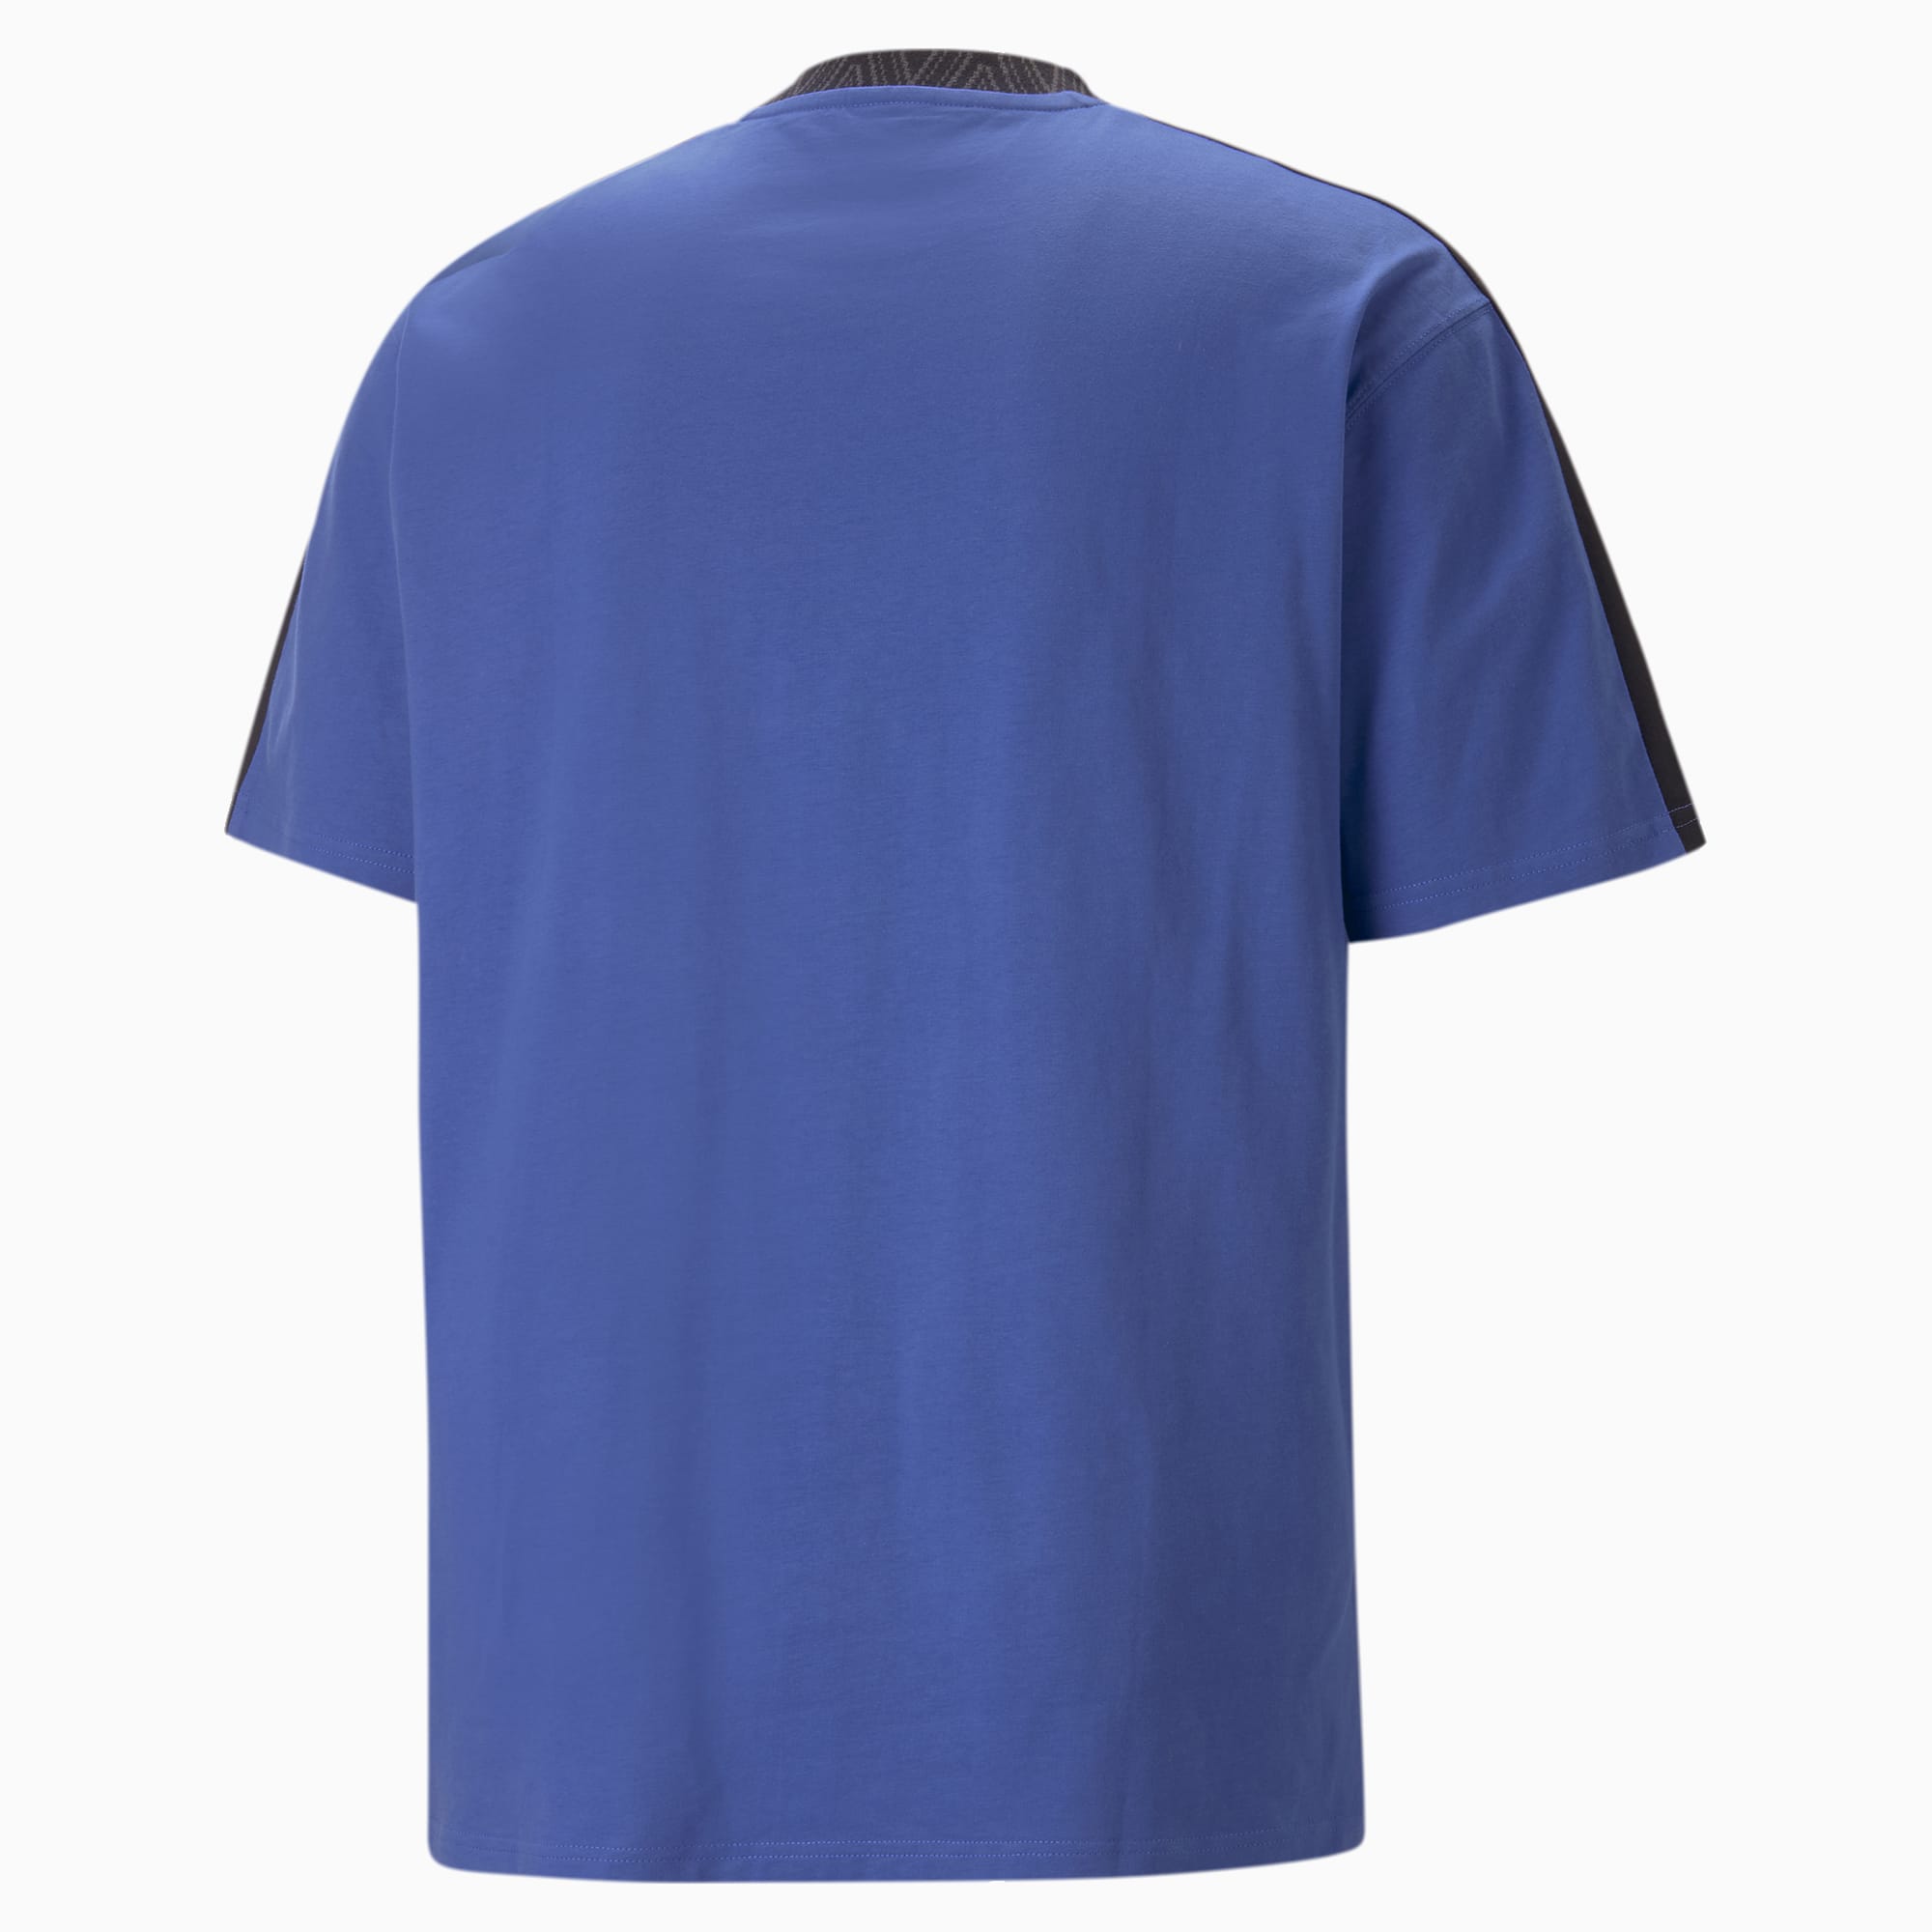 PUMA T7 Trend 7Etter T-Shirt Men, Royal Blue, Size XS, Clothing